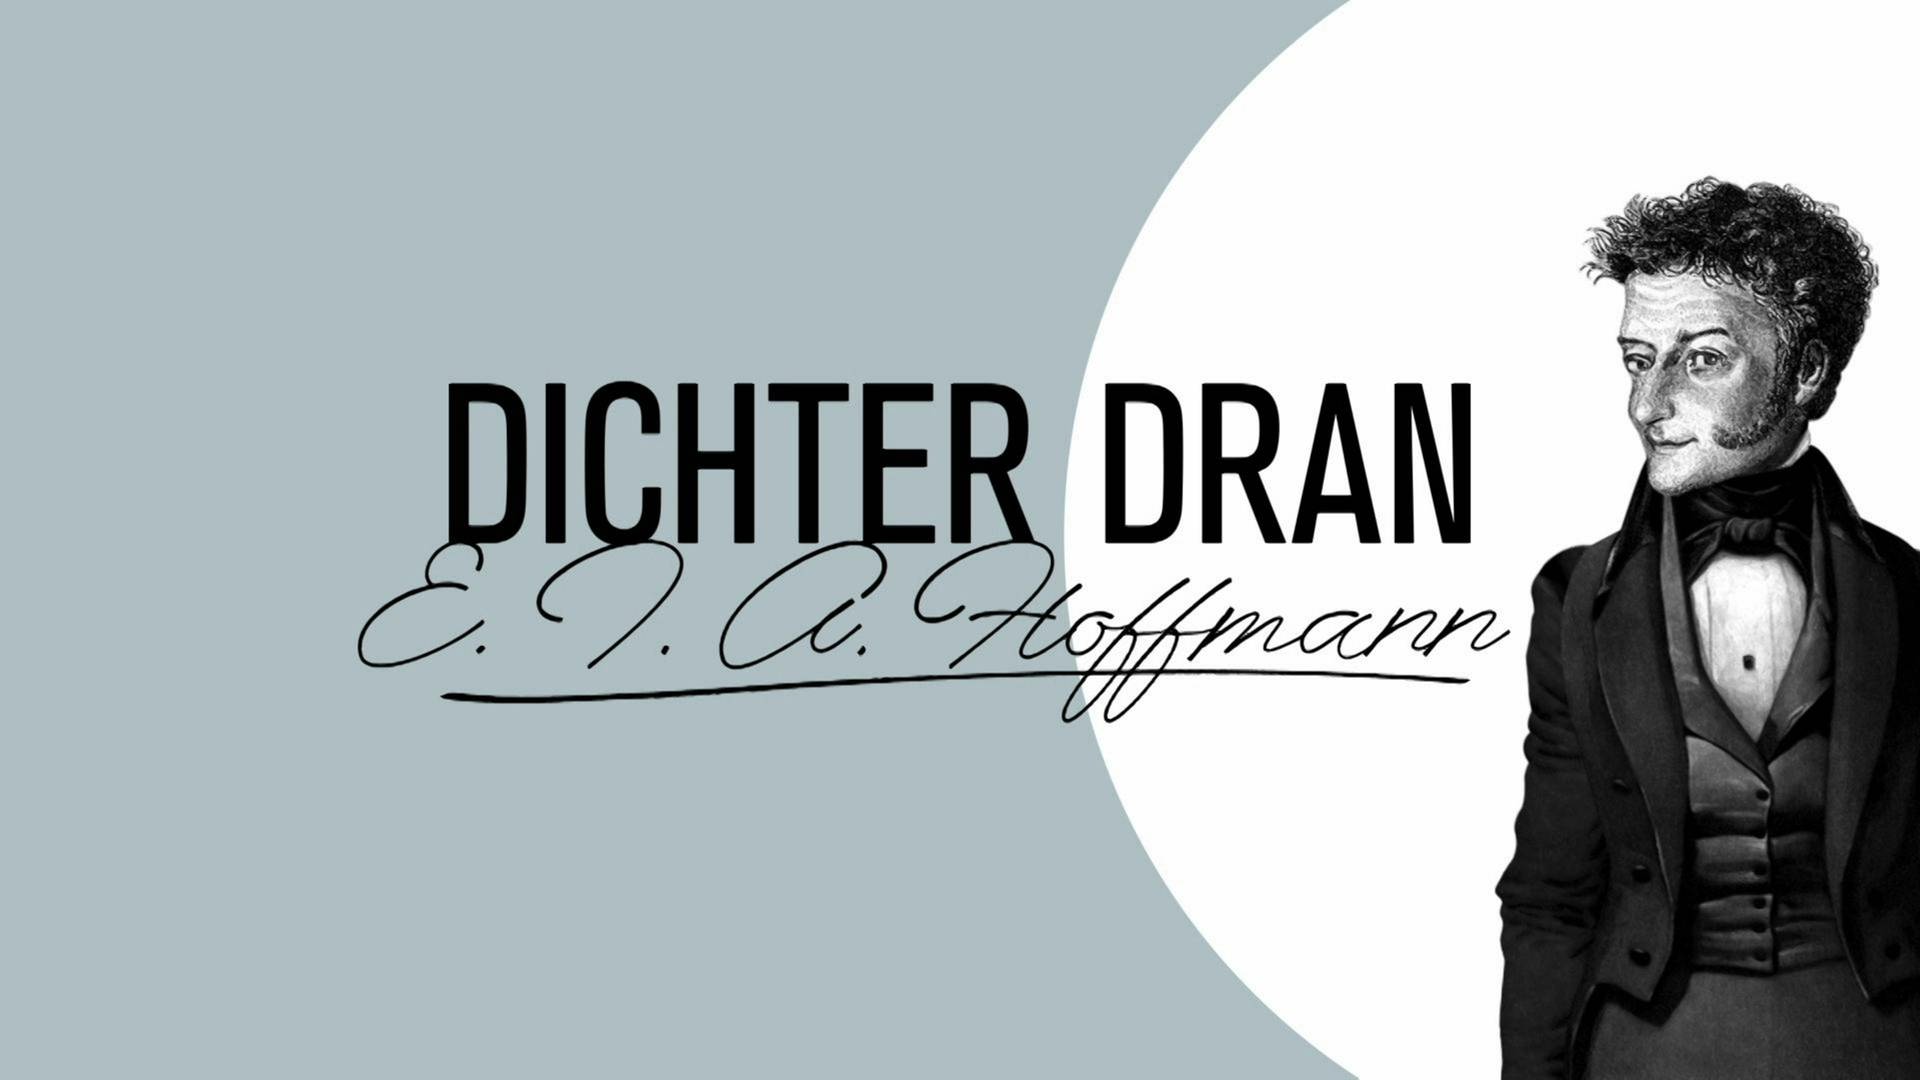 Schwarz weiß Zeichnung von E.T.A. Hoffmann, daneben der Schriftzug "DICHTER DRAN - E.T.A. Hoffmann".